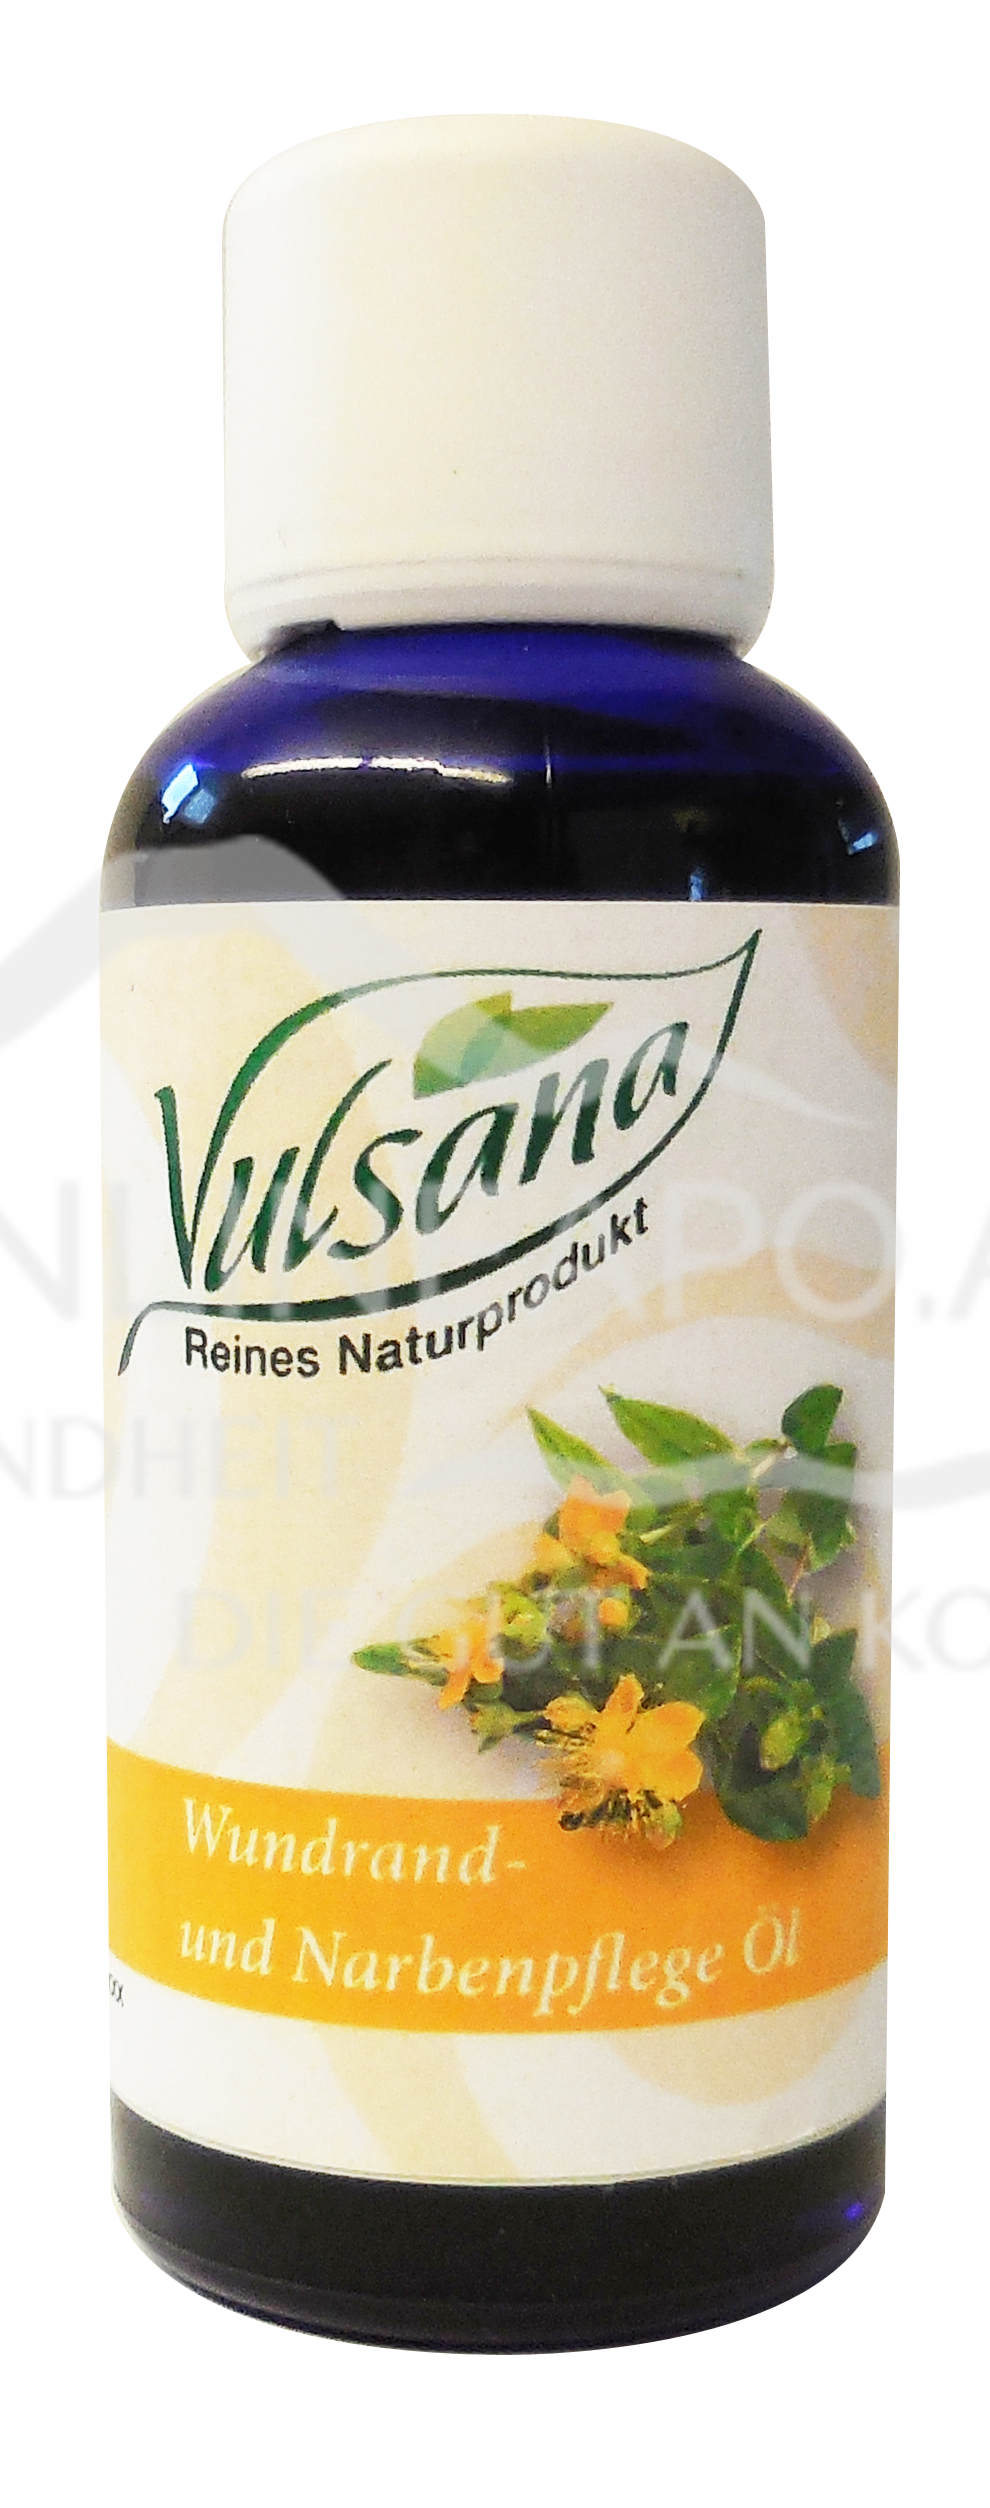 Vulsana Wundrand- und Narbenpflege Öl